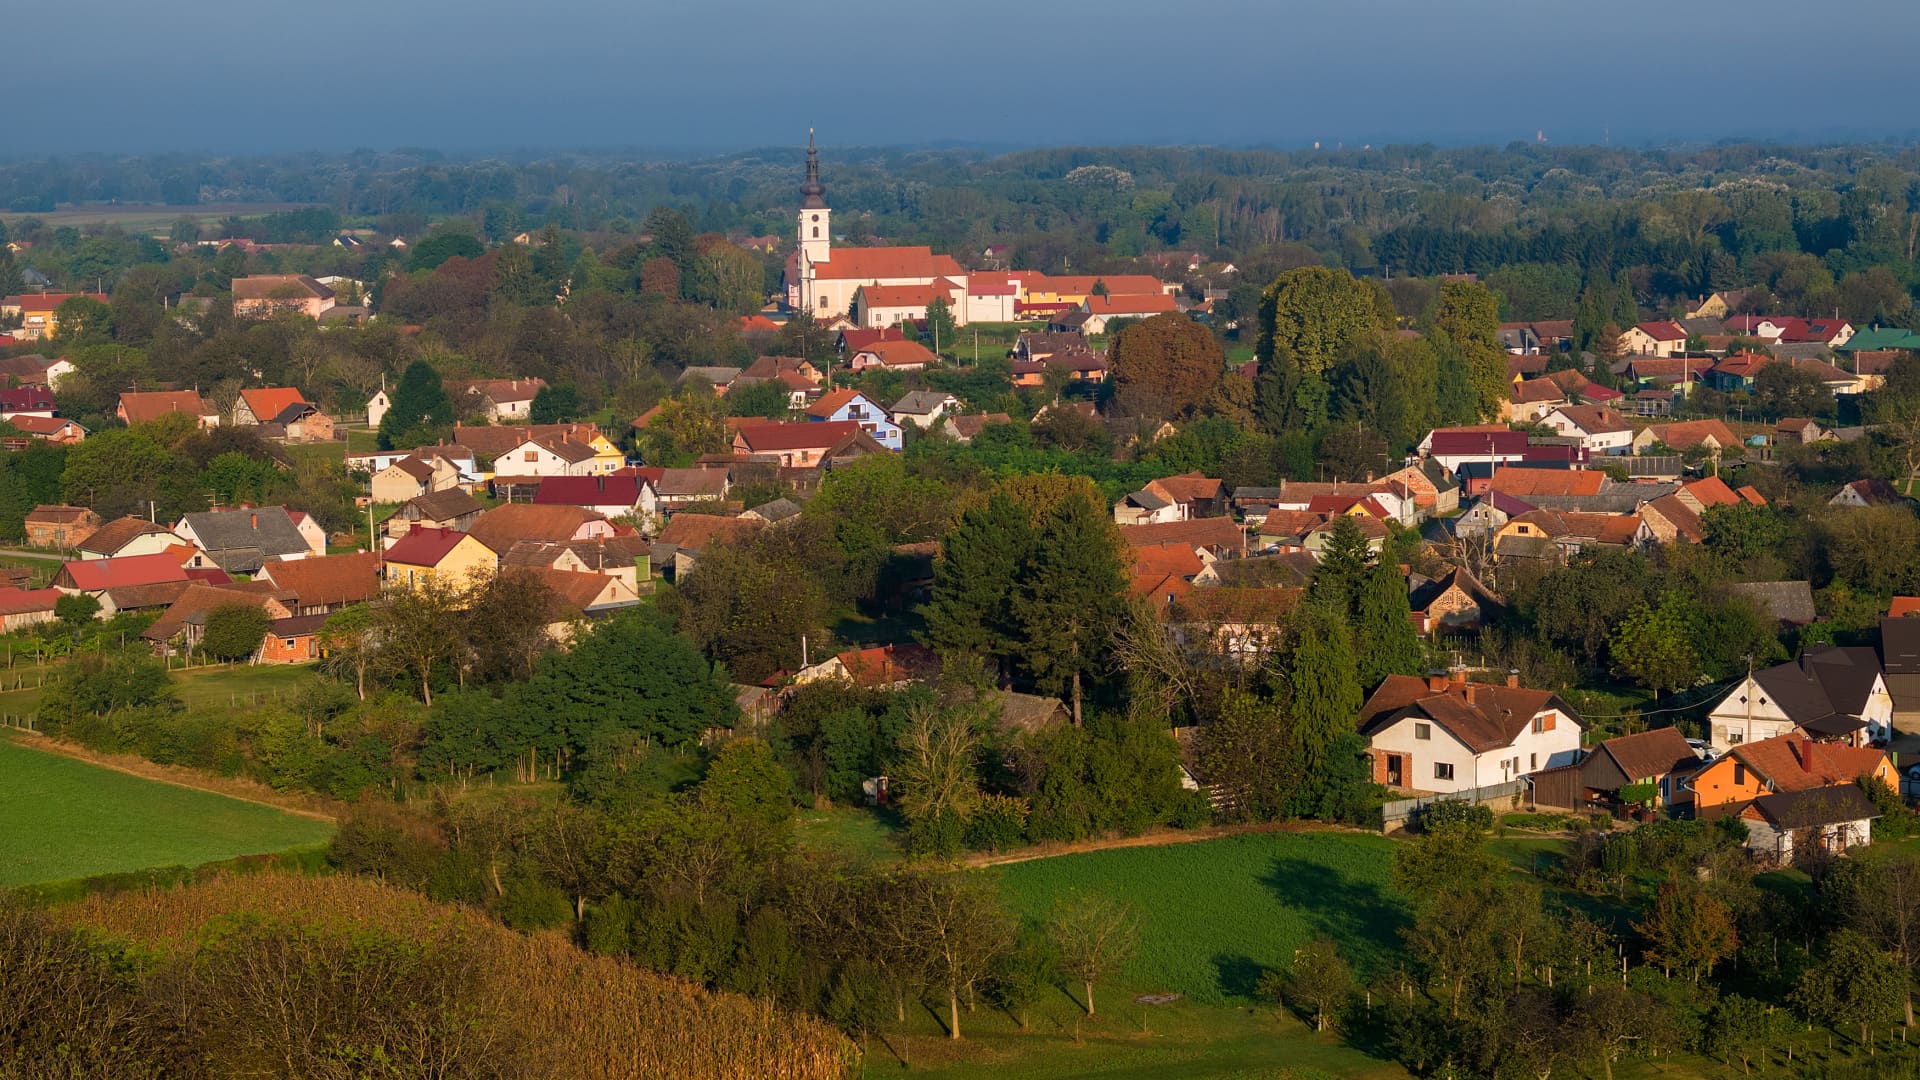 Legrad, Croatia has a population of around 2,000 people.